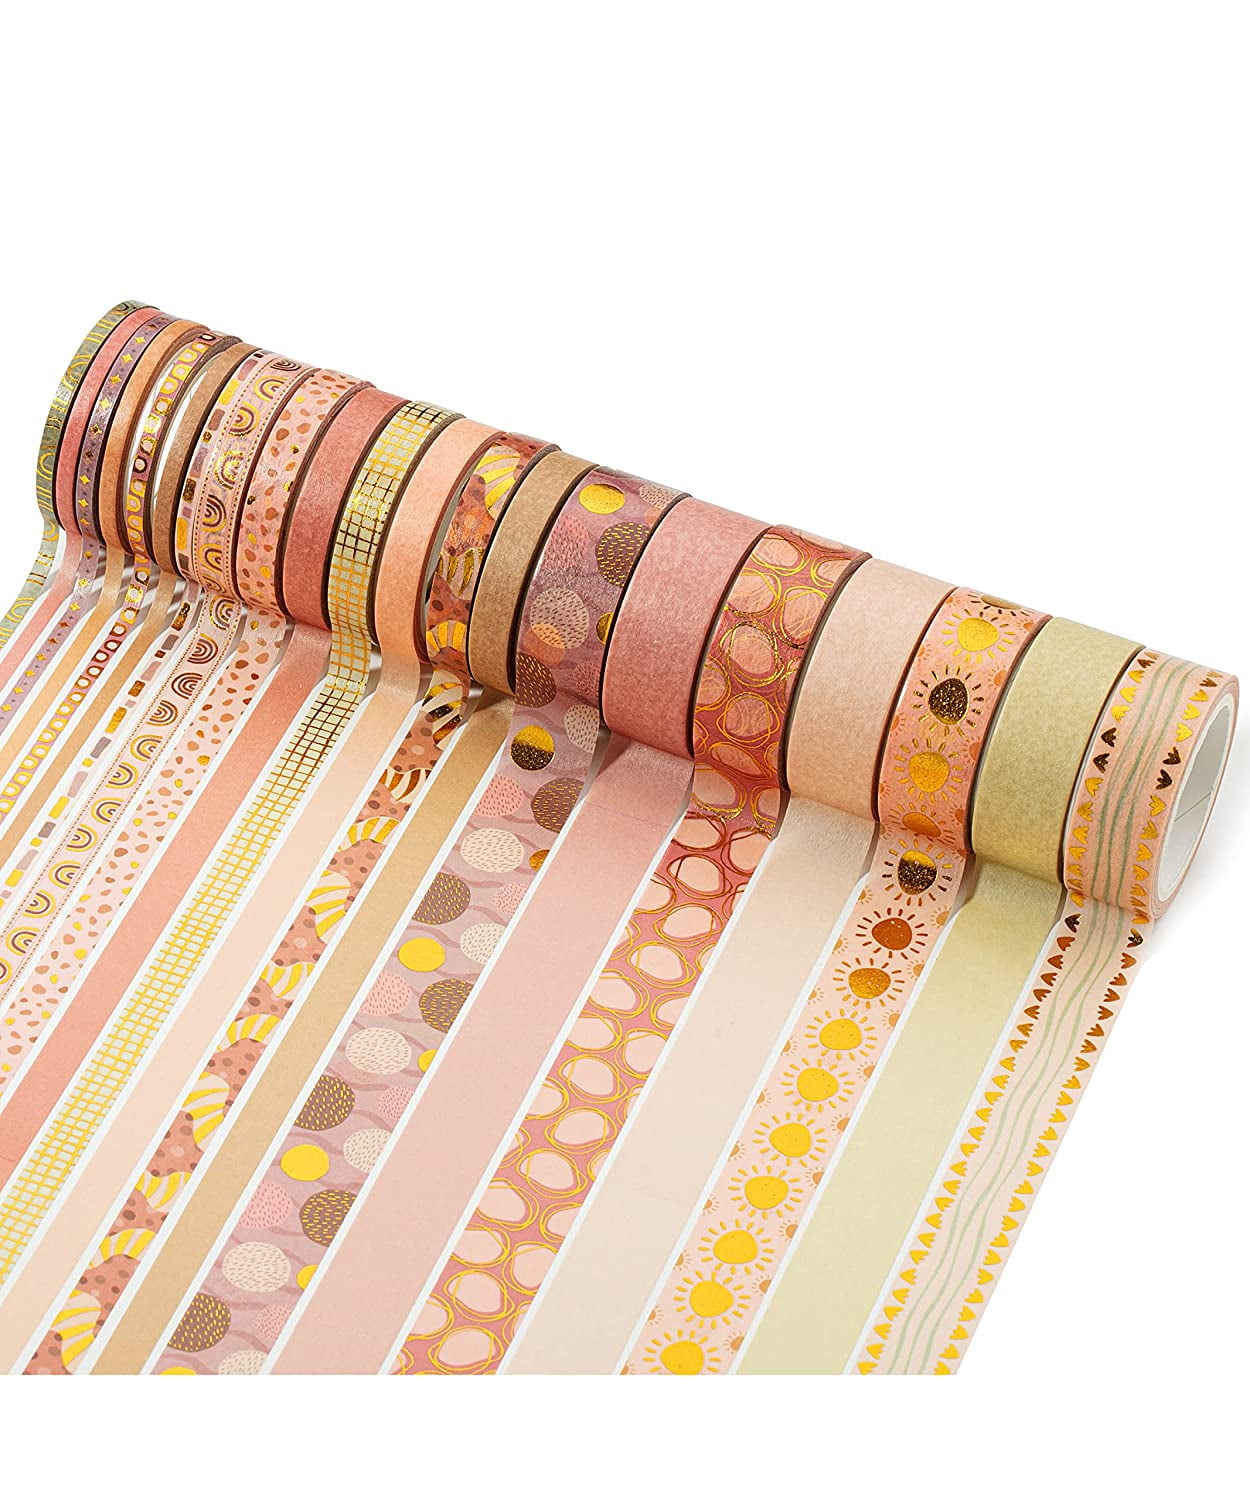 Mr. Pen- Grid Washi Tape Set, 7 Rolls, 0.6, Washi Tape for Journaling,  Decorative Tape - Mr. Pen Store